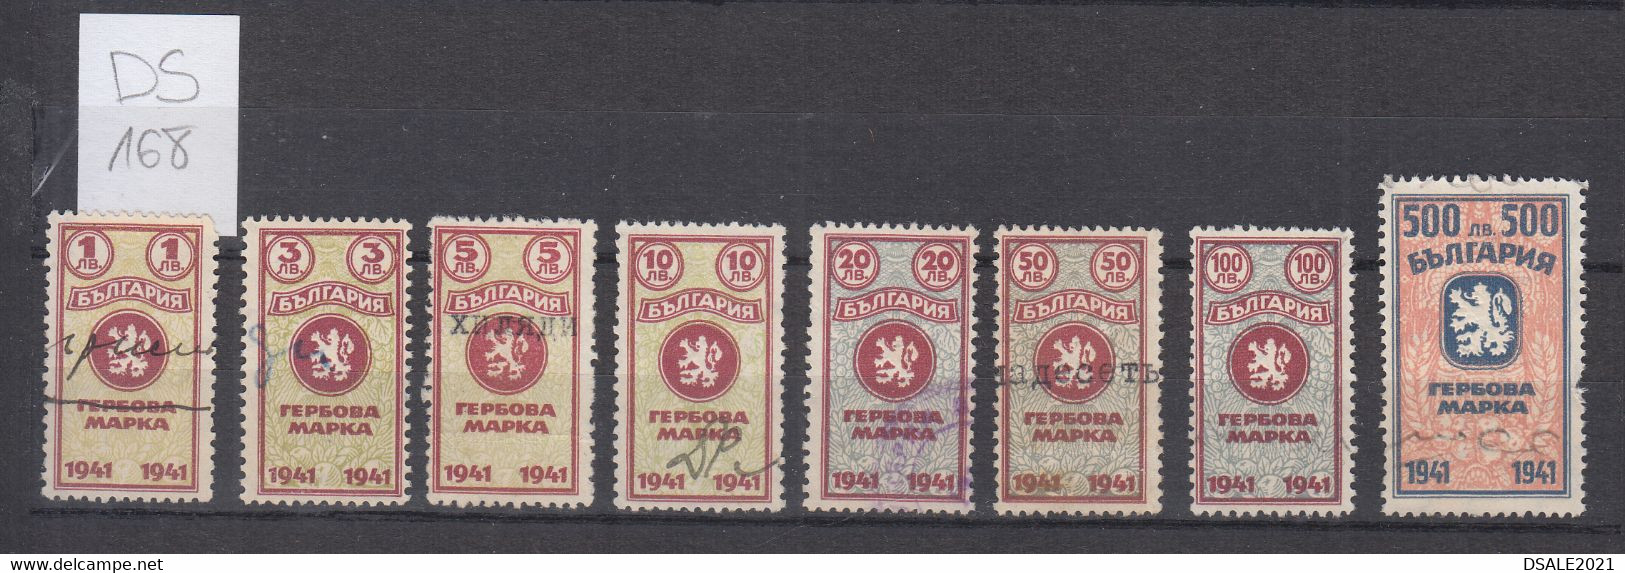 Bulgaria Bulgarie Bulgarije 1945 Bulgarian Fiscal Revenue Revenues Stamp Stamps (ds168) - Francobolli Di Servizio